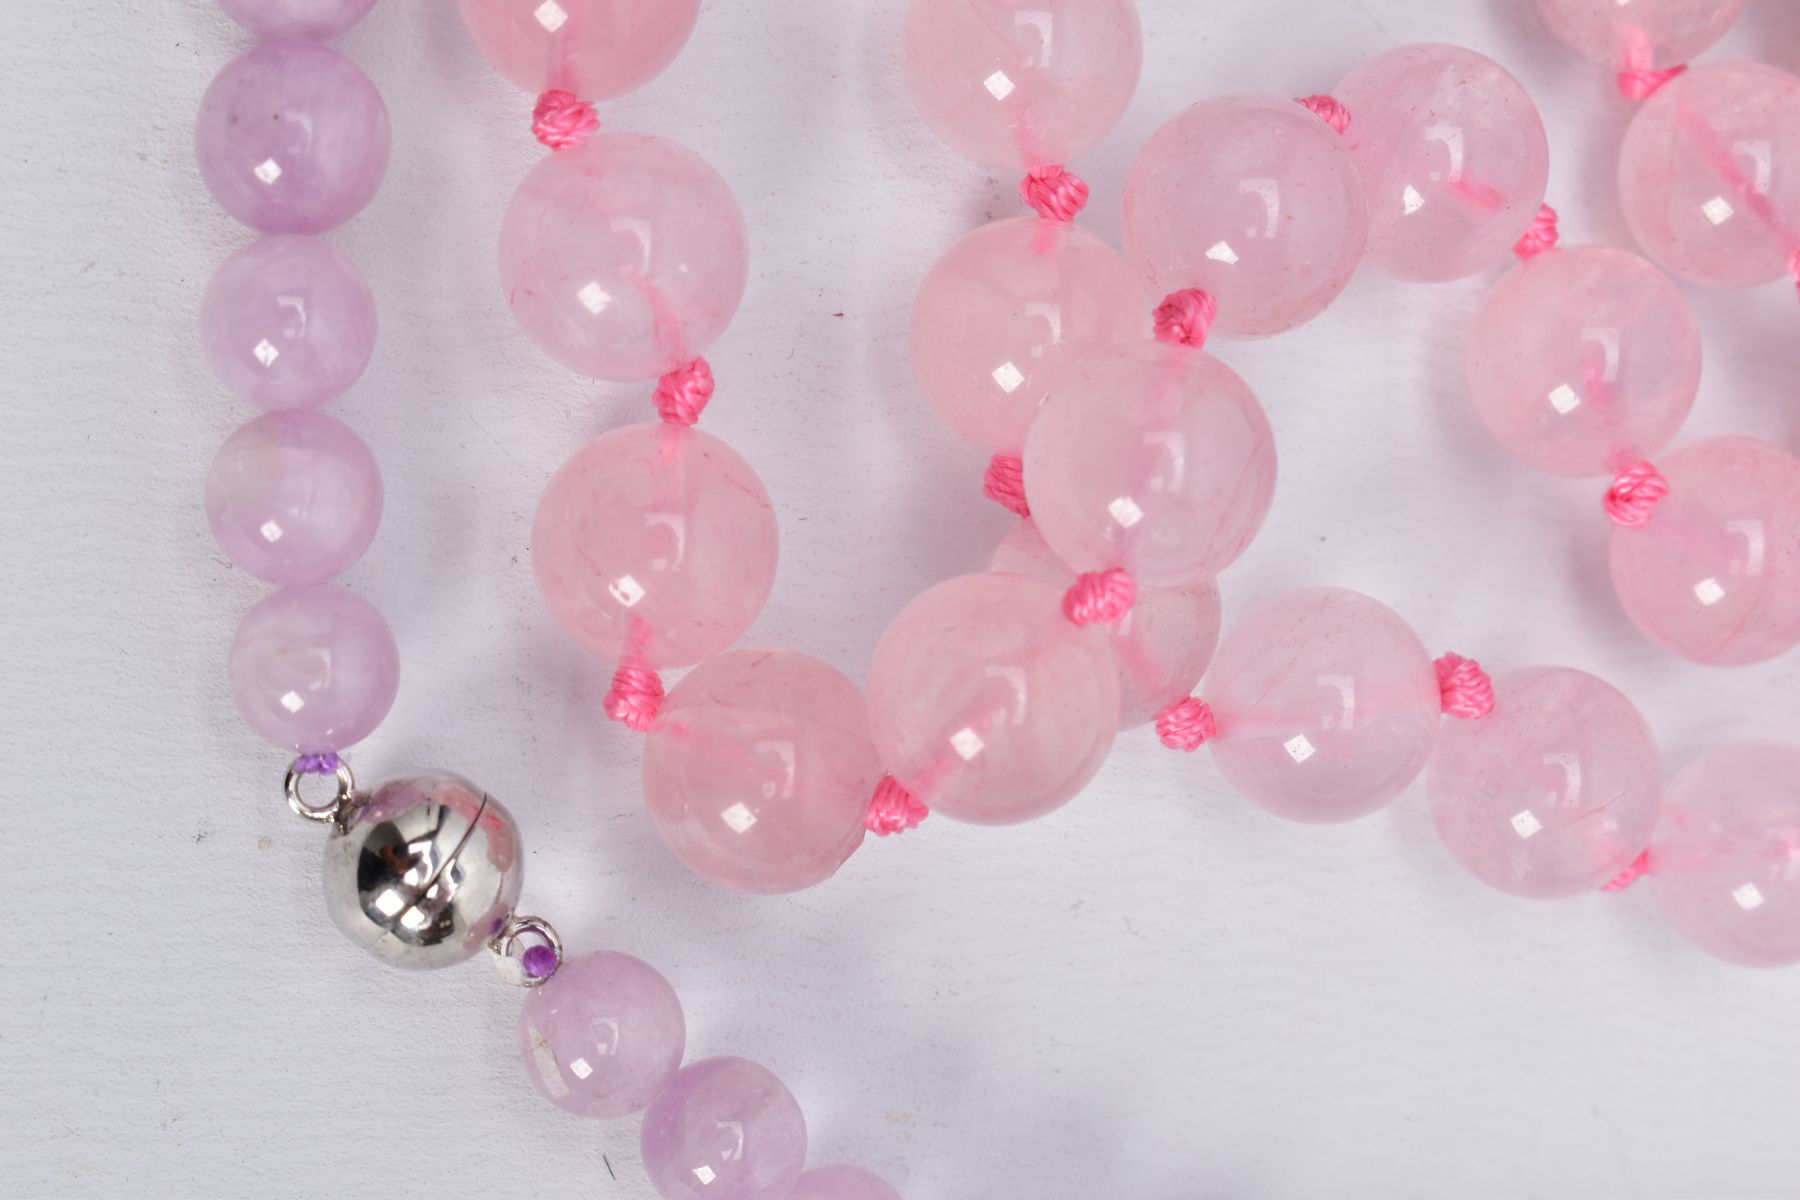 ROSE QUARTZ AND LAVENDER JADE BEAD NECKLACES, the first designed with rose quartz circular beads, - Image 2 of 3